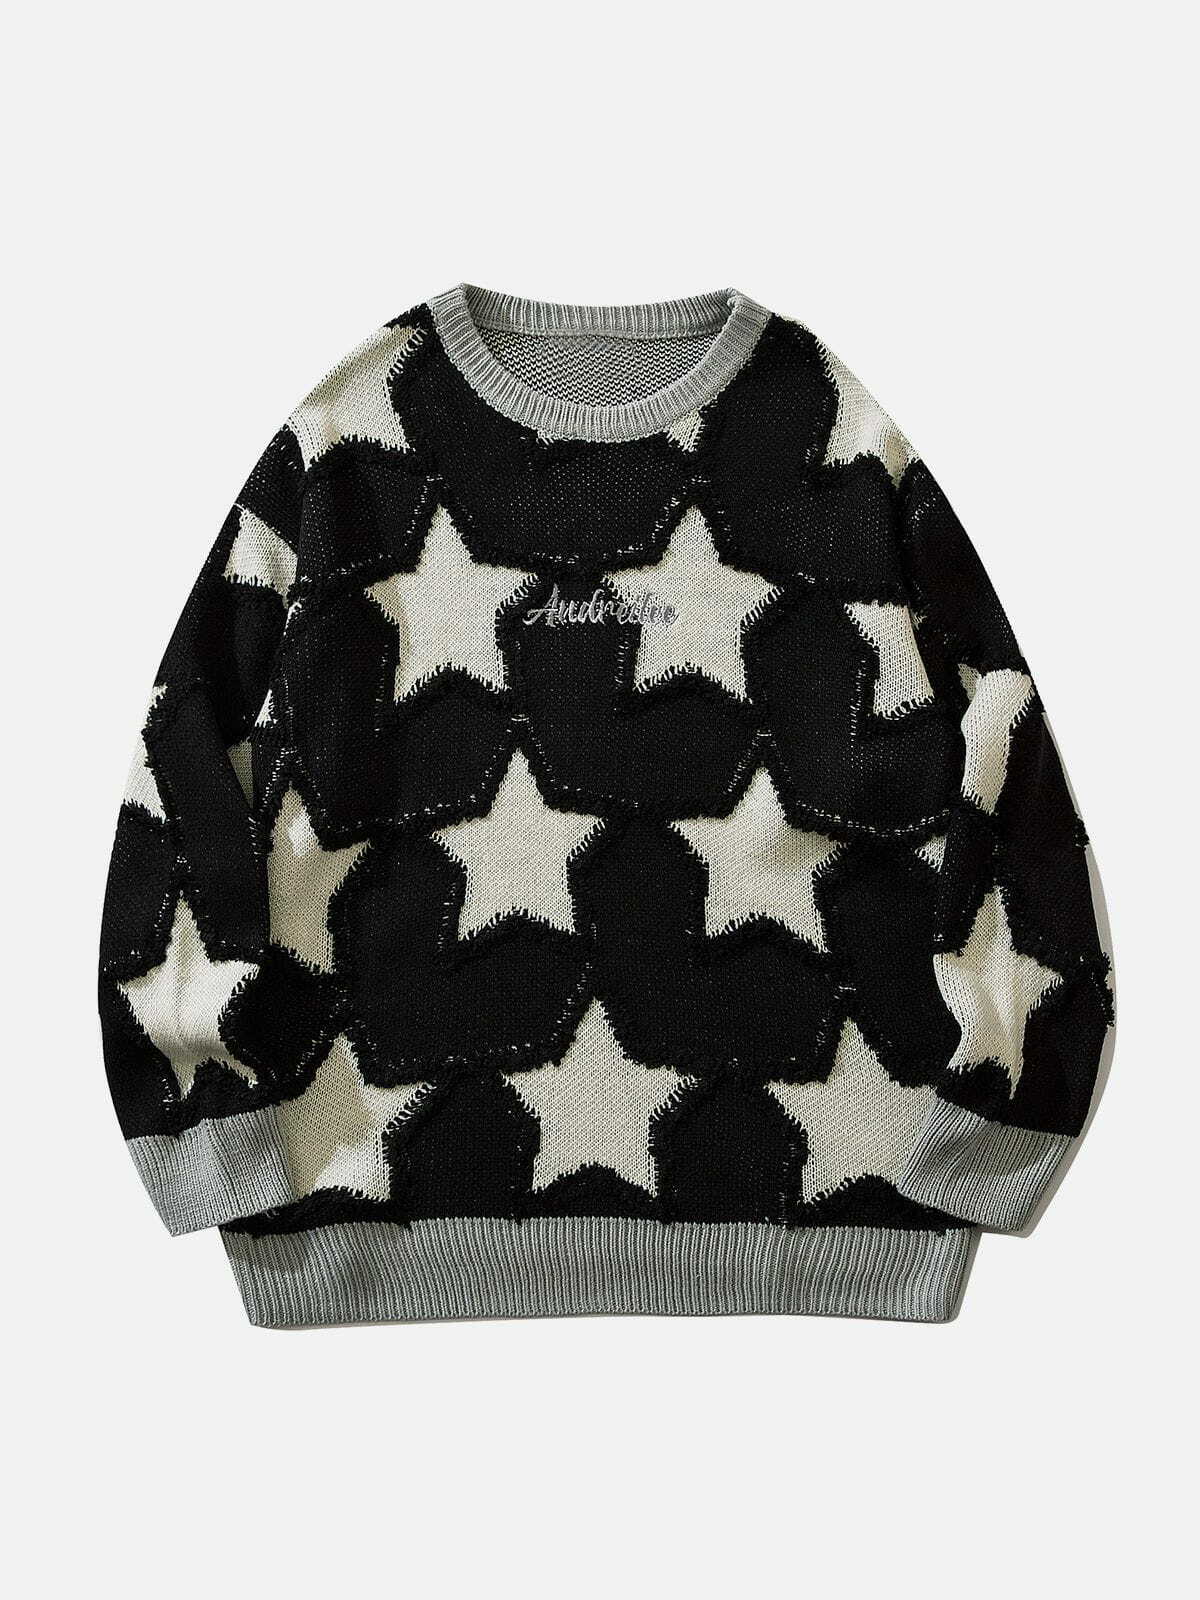 pentagram embroidered sweater edgy & trendy streetwear 7263